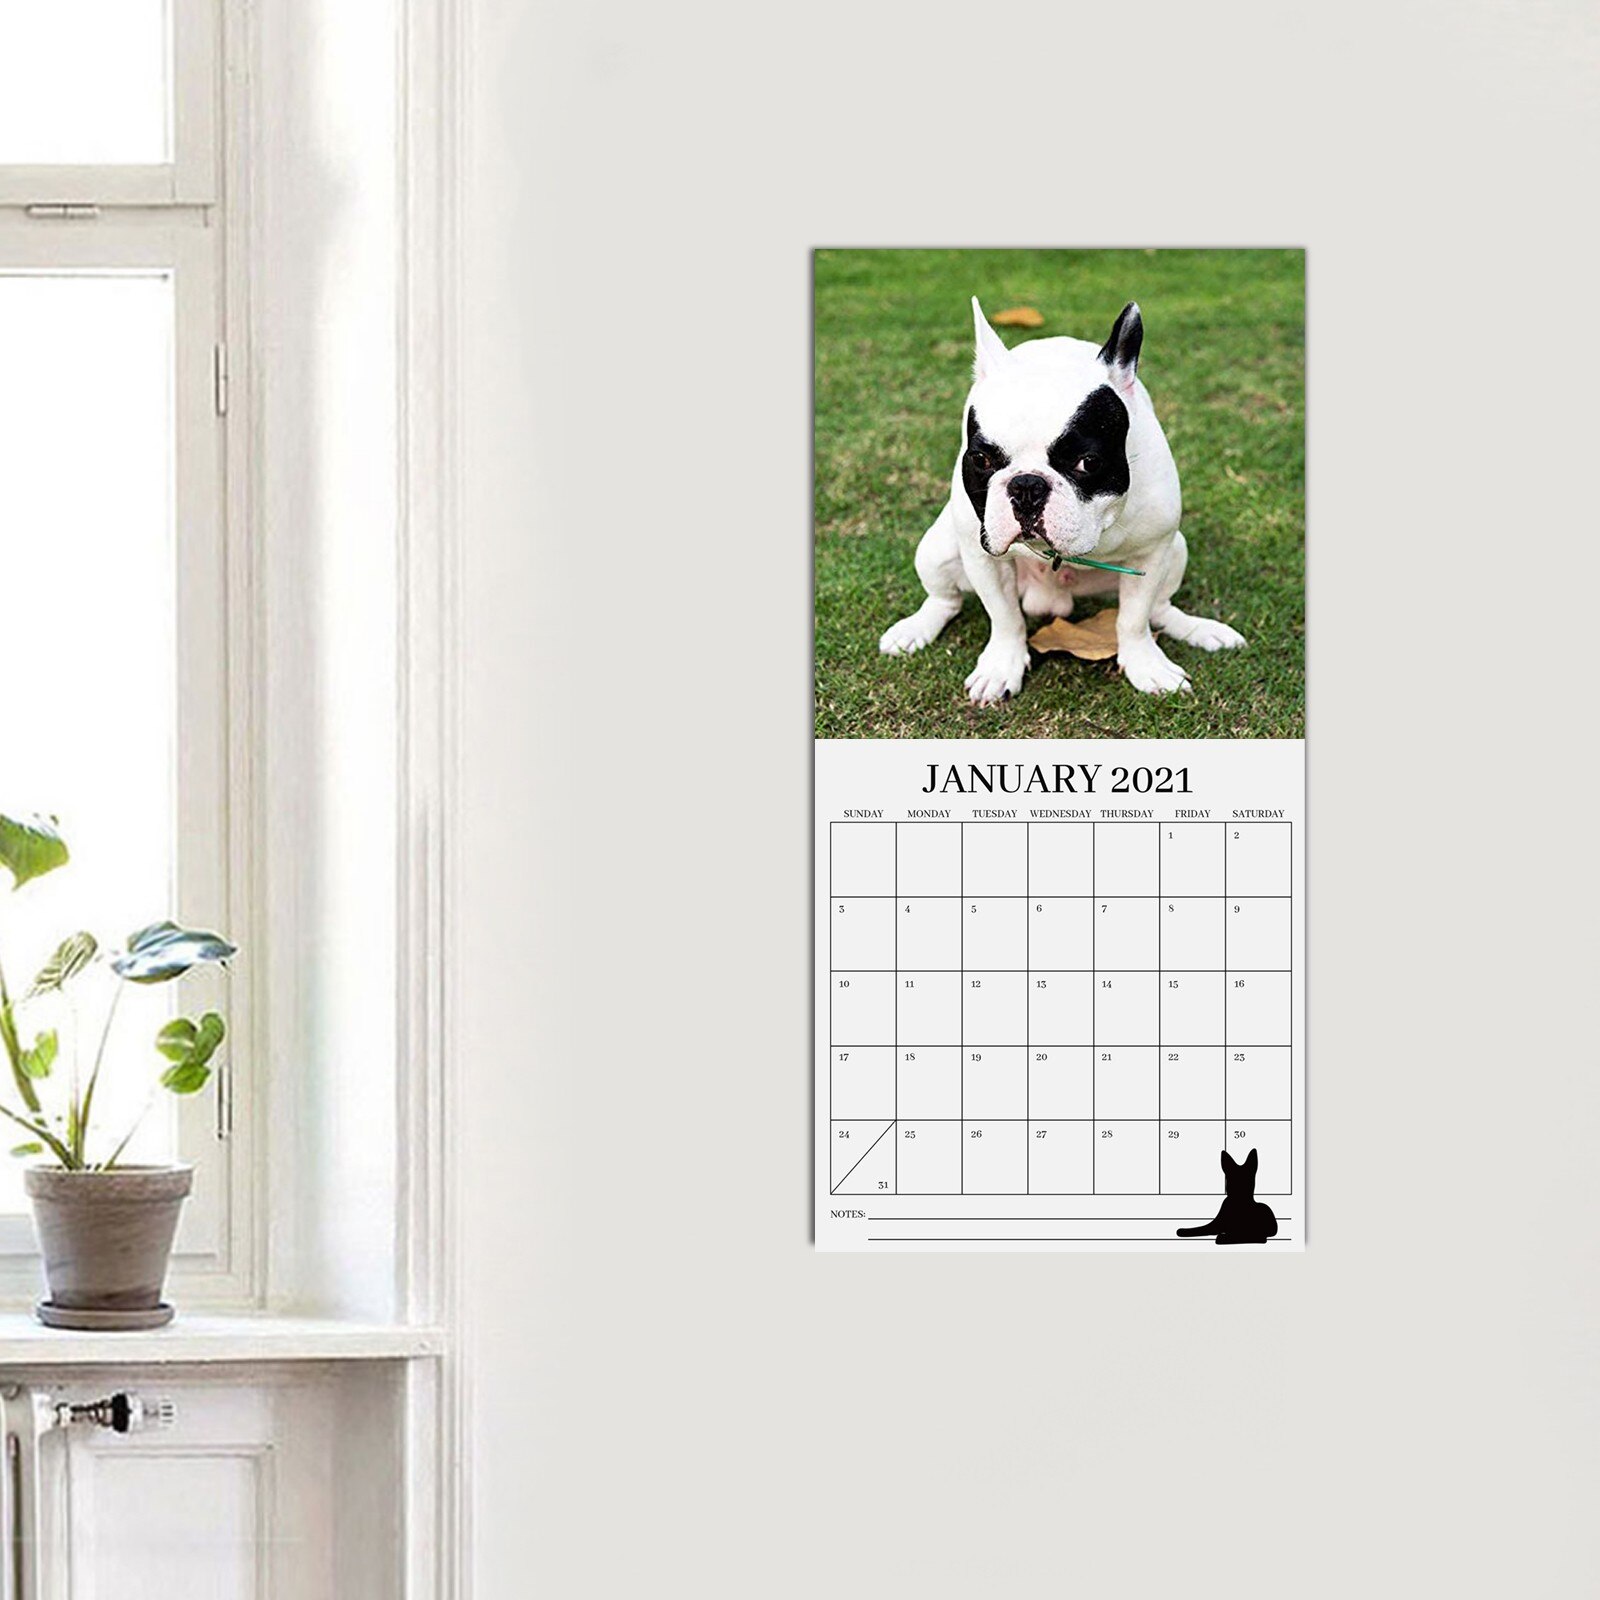 Kawaii Cute Calendar Pooping Dogs Calendar Pooping Dogs Wall Calendar